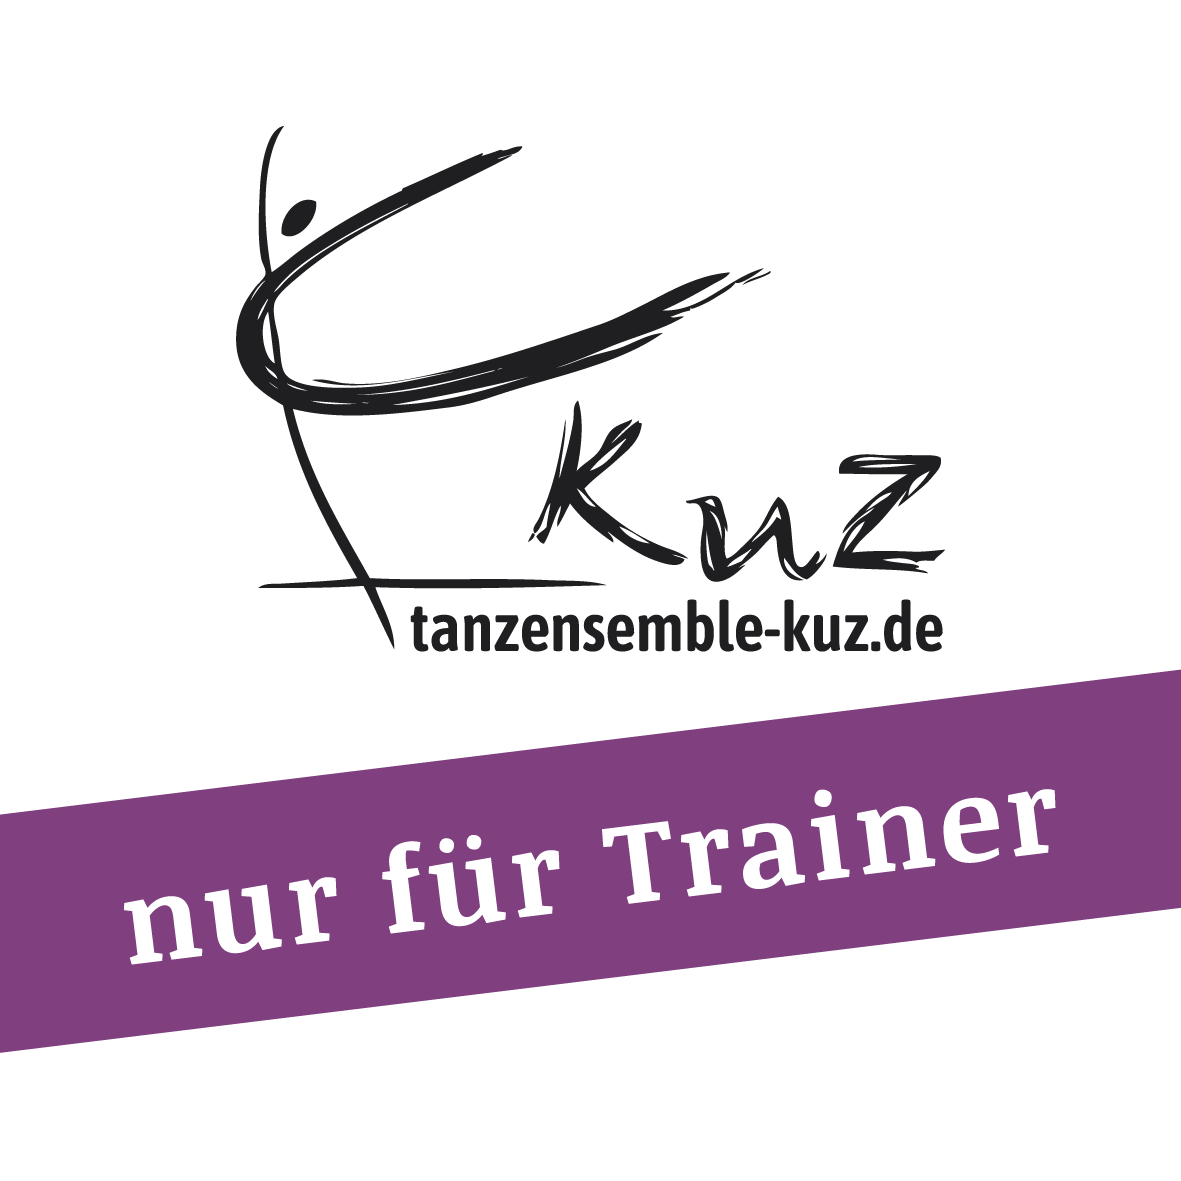 kuz - Trainer